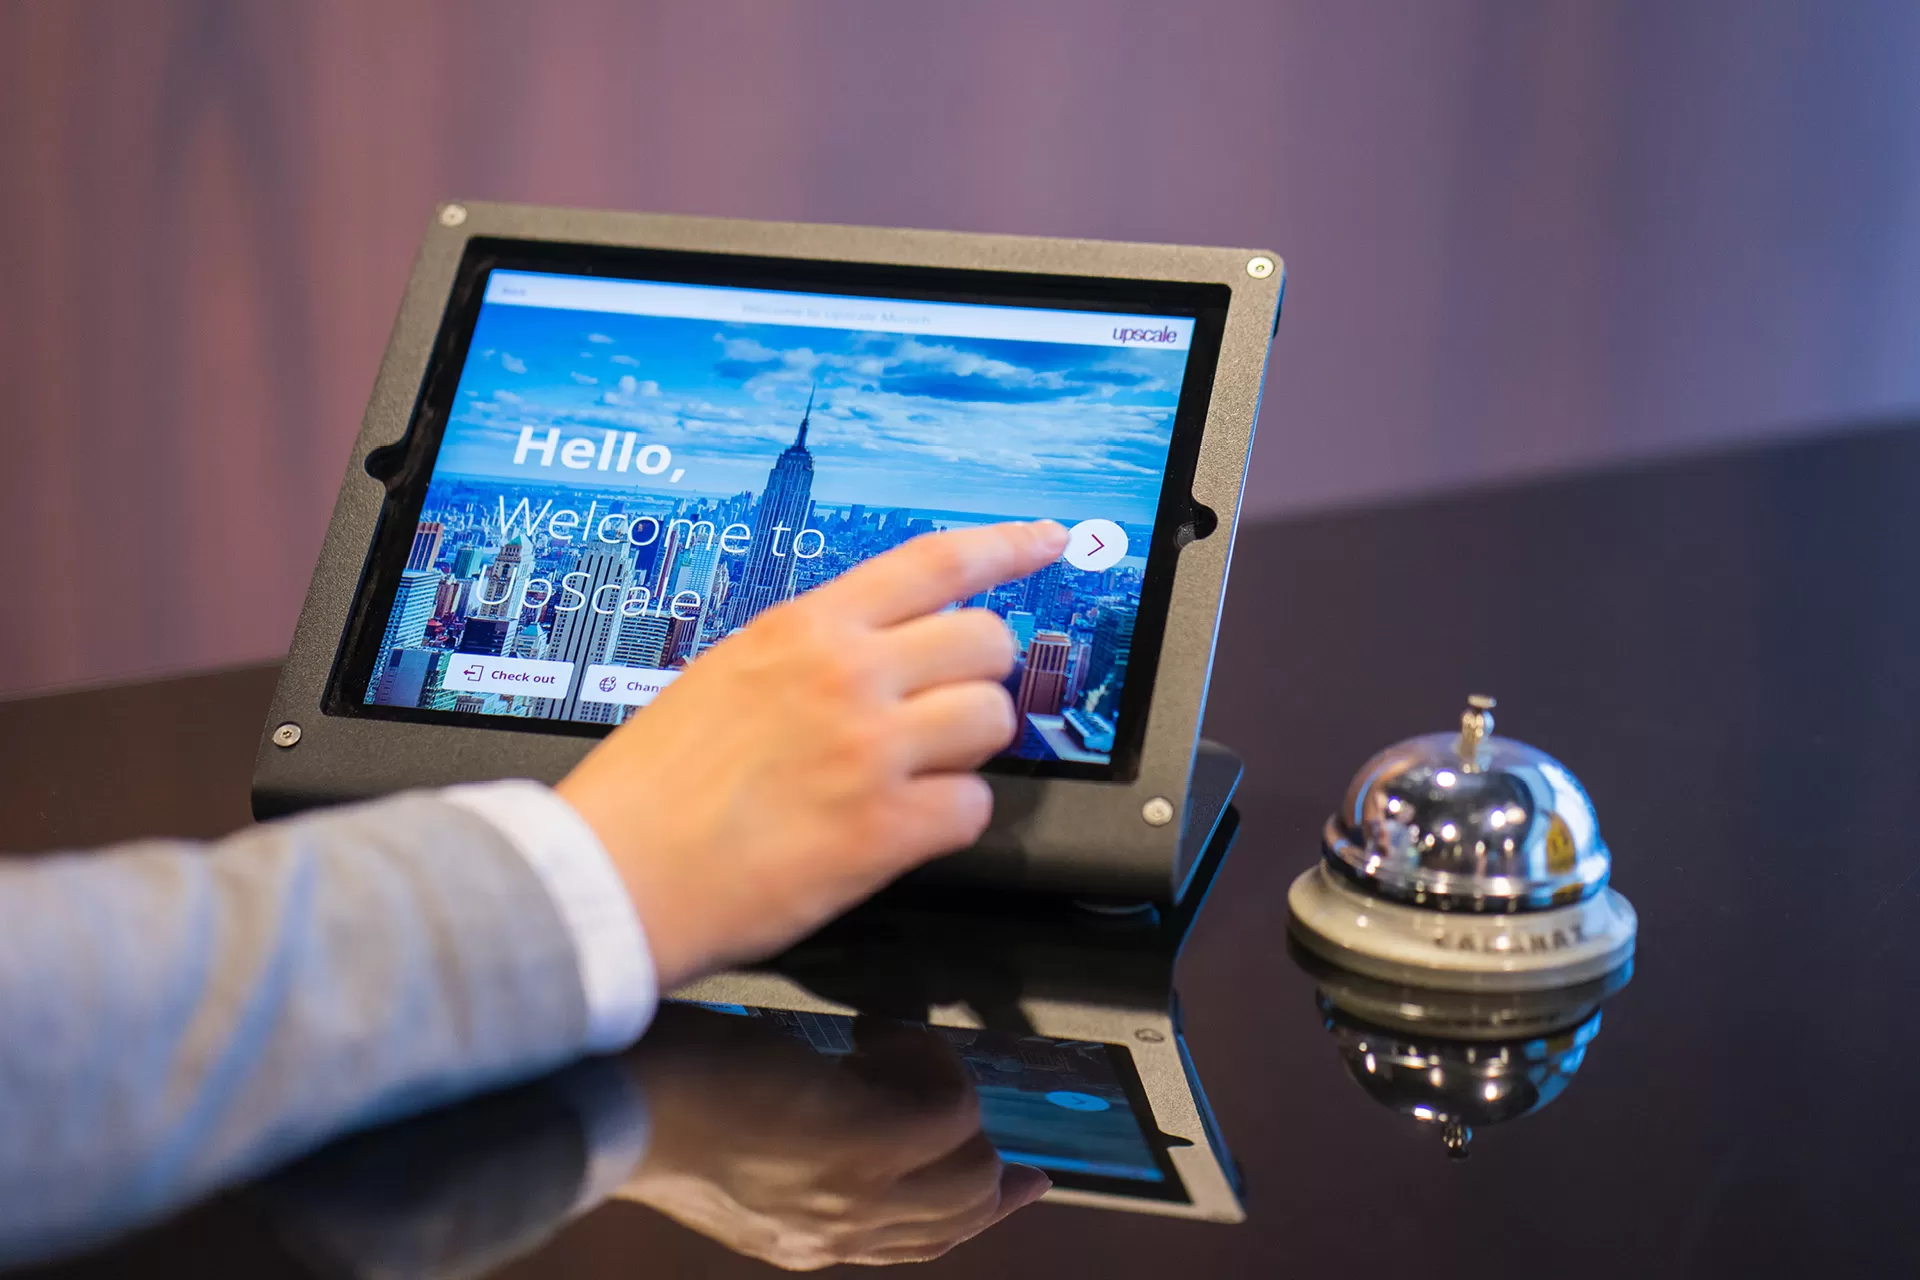 Digitales Check-In über Tablet an Hotelreception, daneben steht Tischglocke / Receptionsglocke.